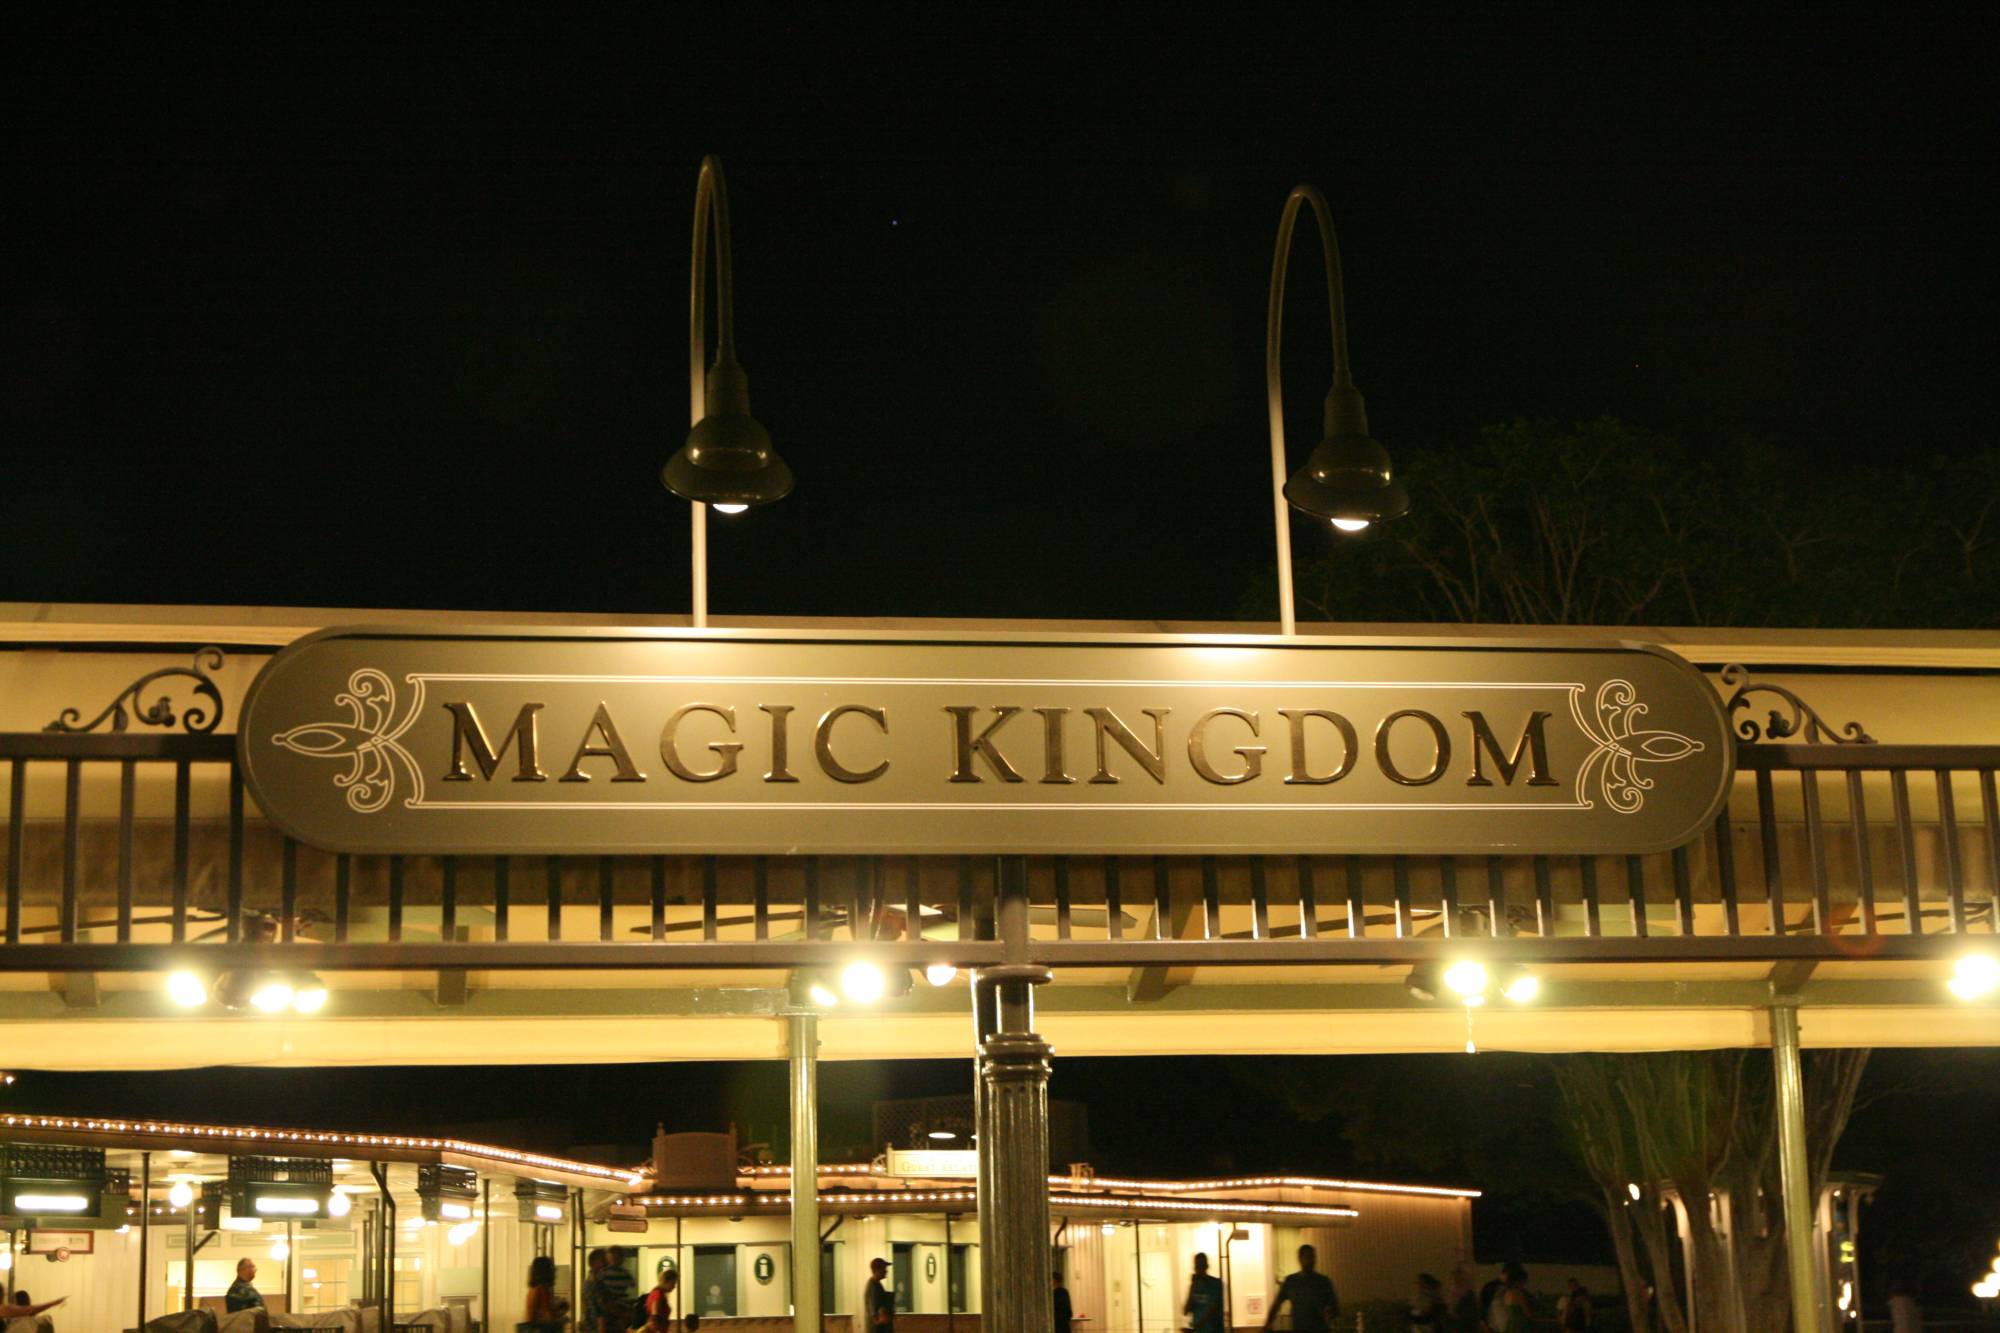 Entrance to the Magic Kingdom